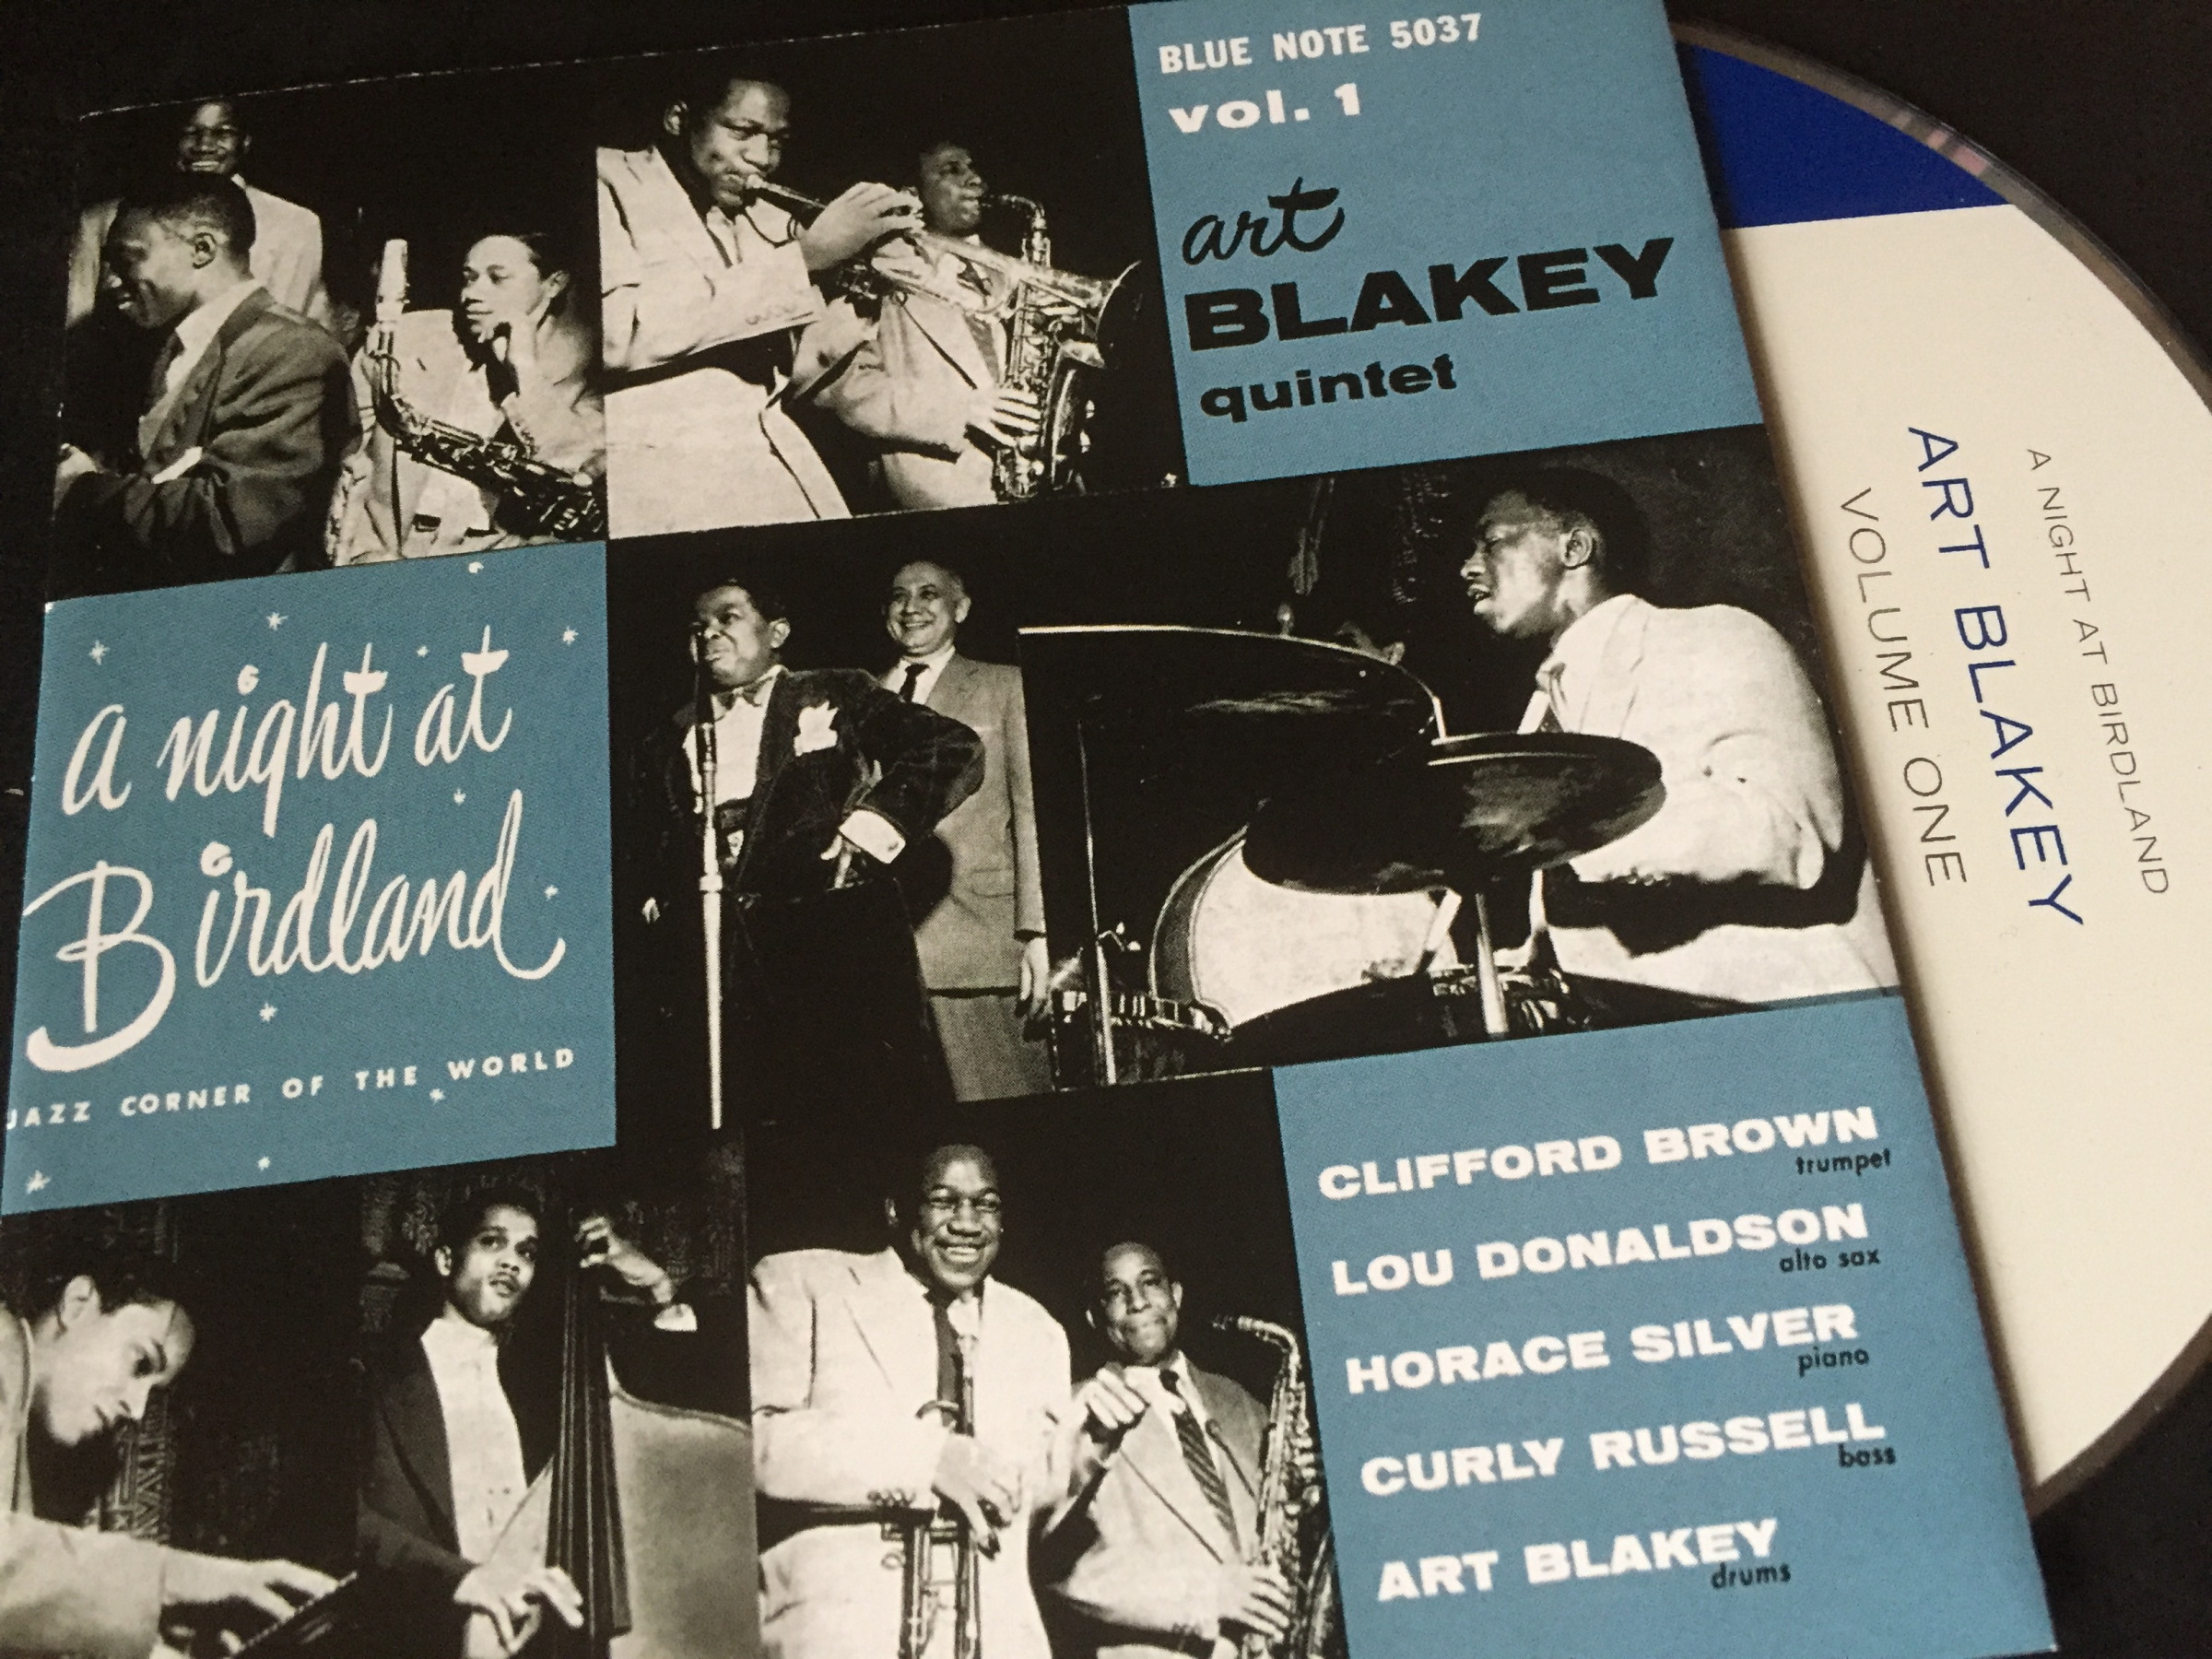 Art Blakey / A Night At Birdland Vol.1: 日々JAZZ的な生活